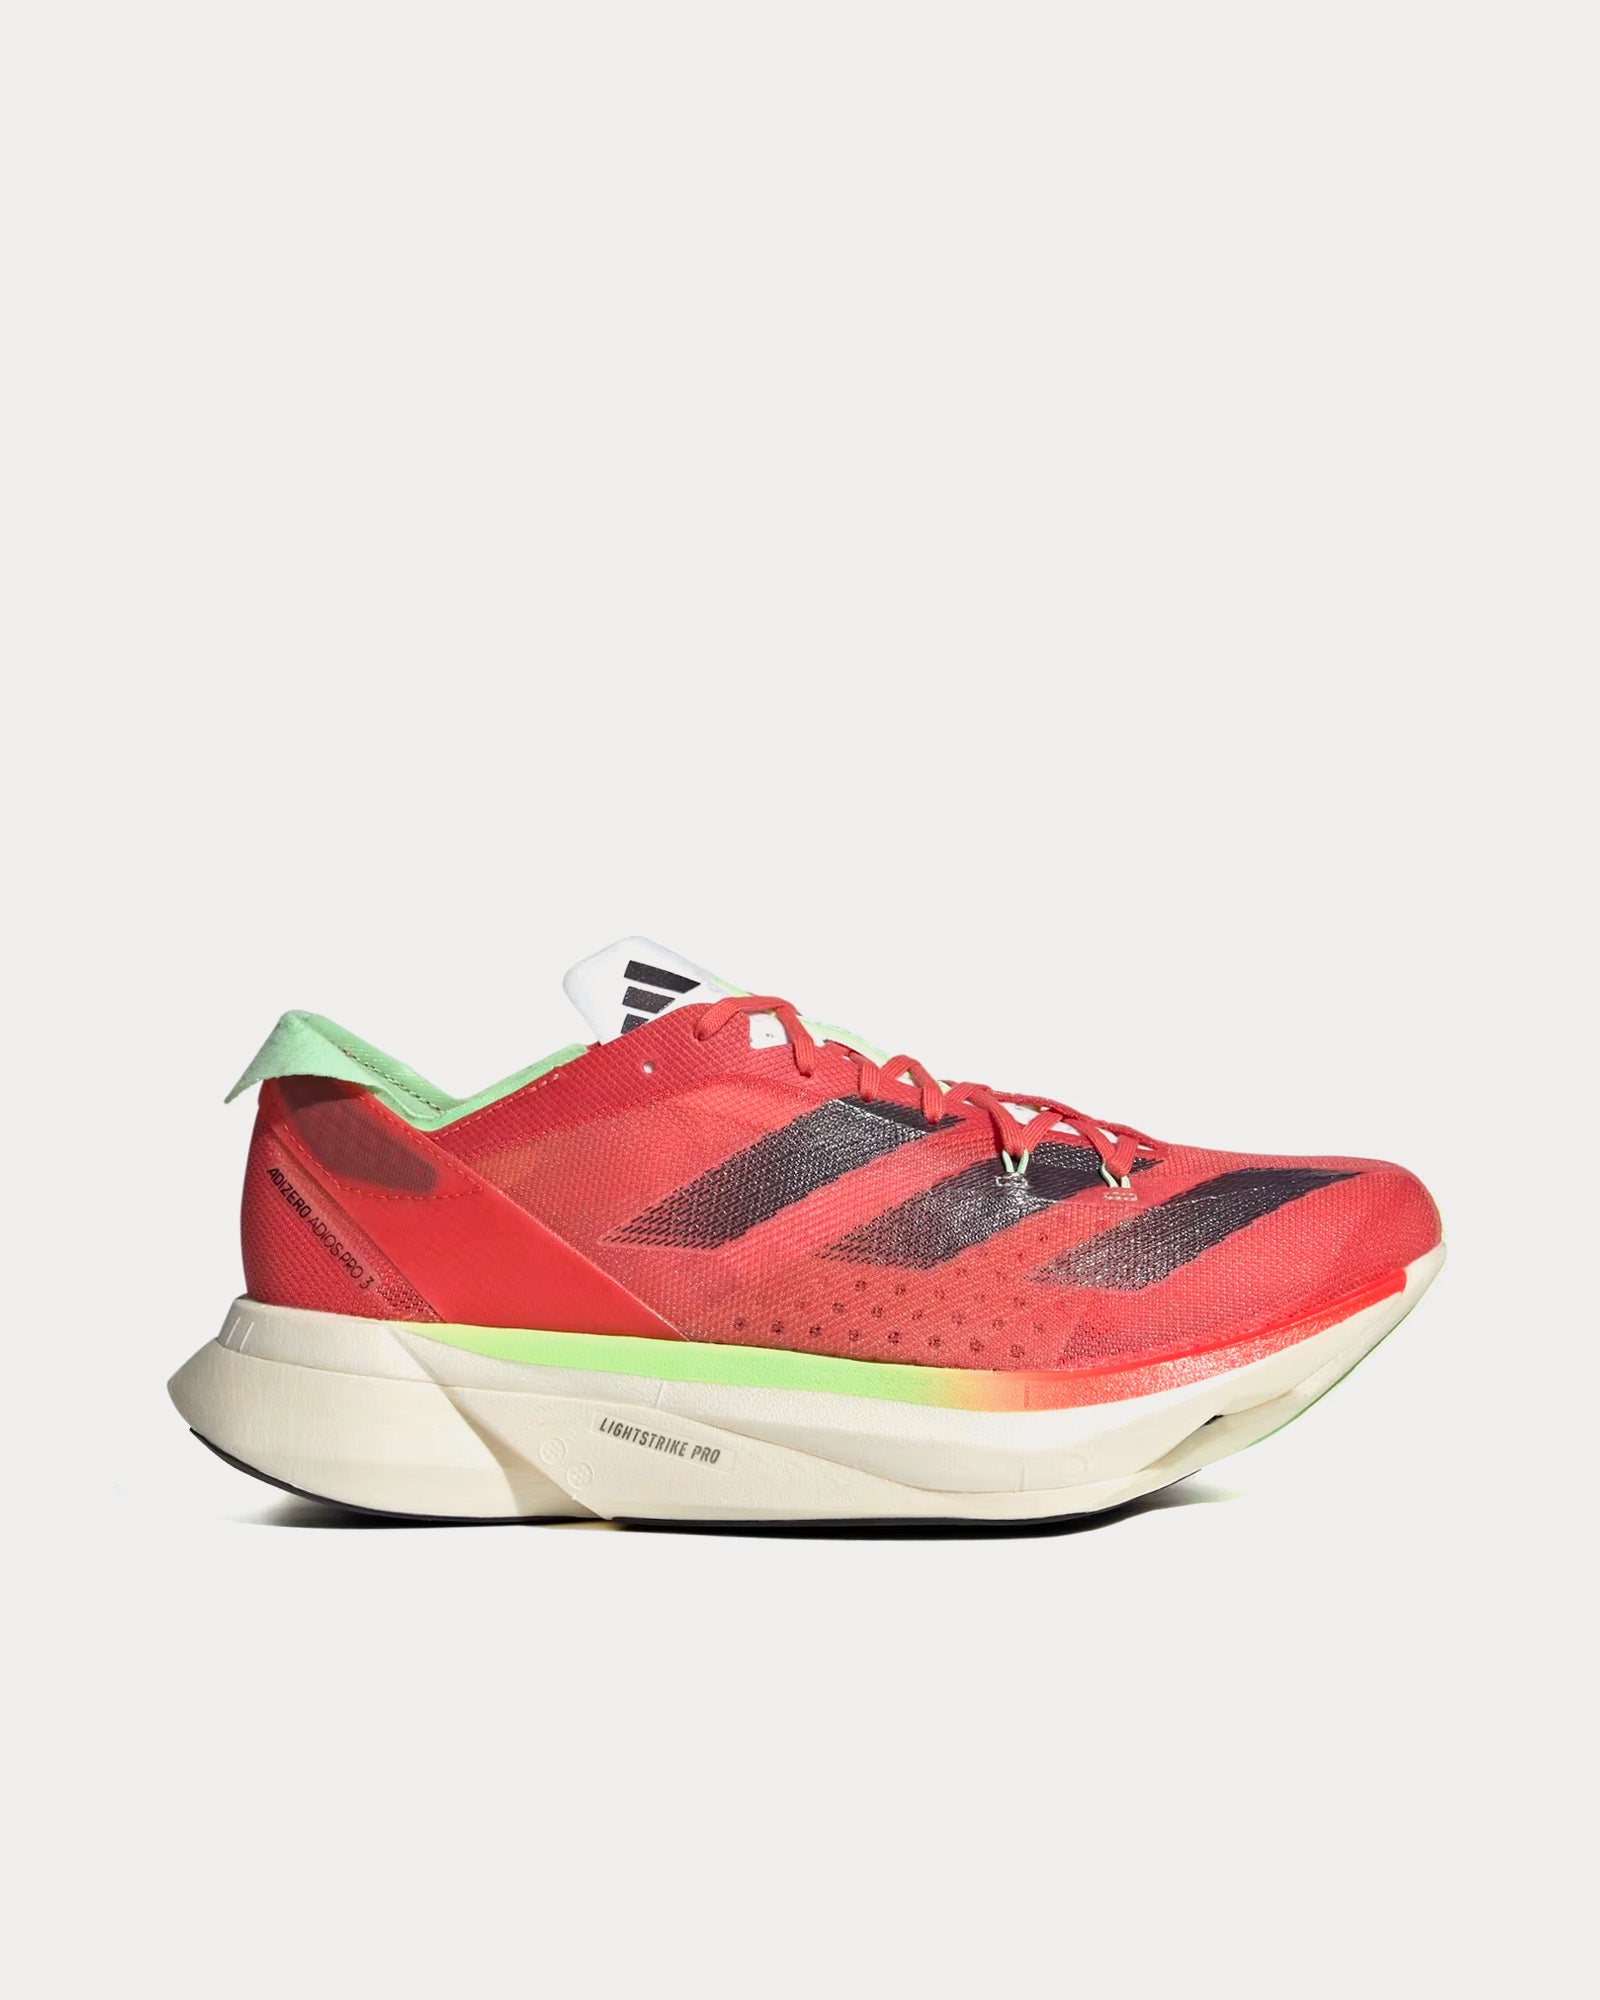 Adidas - Adios Pro 3.0 M Preloved Scarlet / Aurora Met / Solar Red Running Shoes